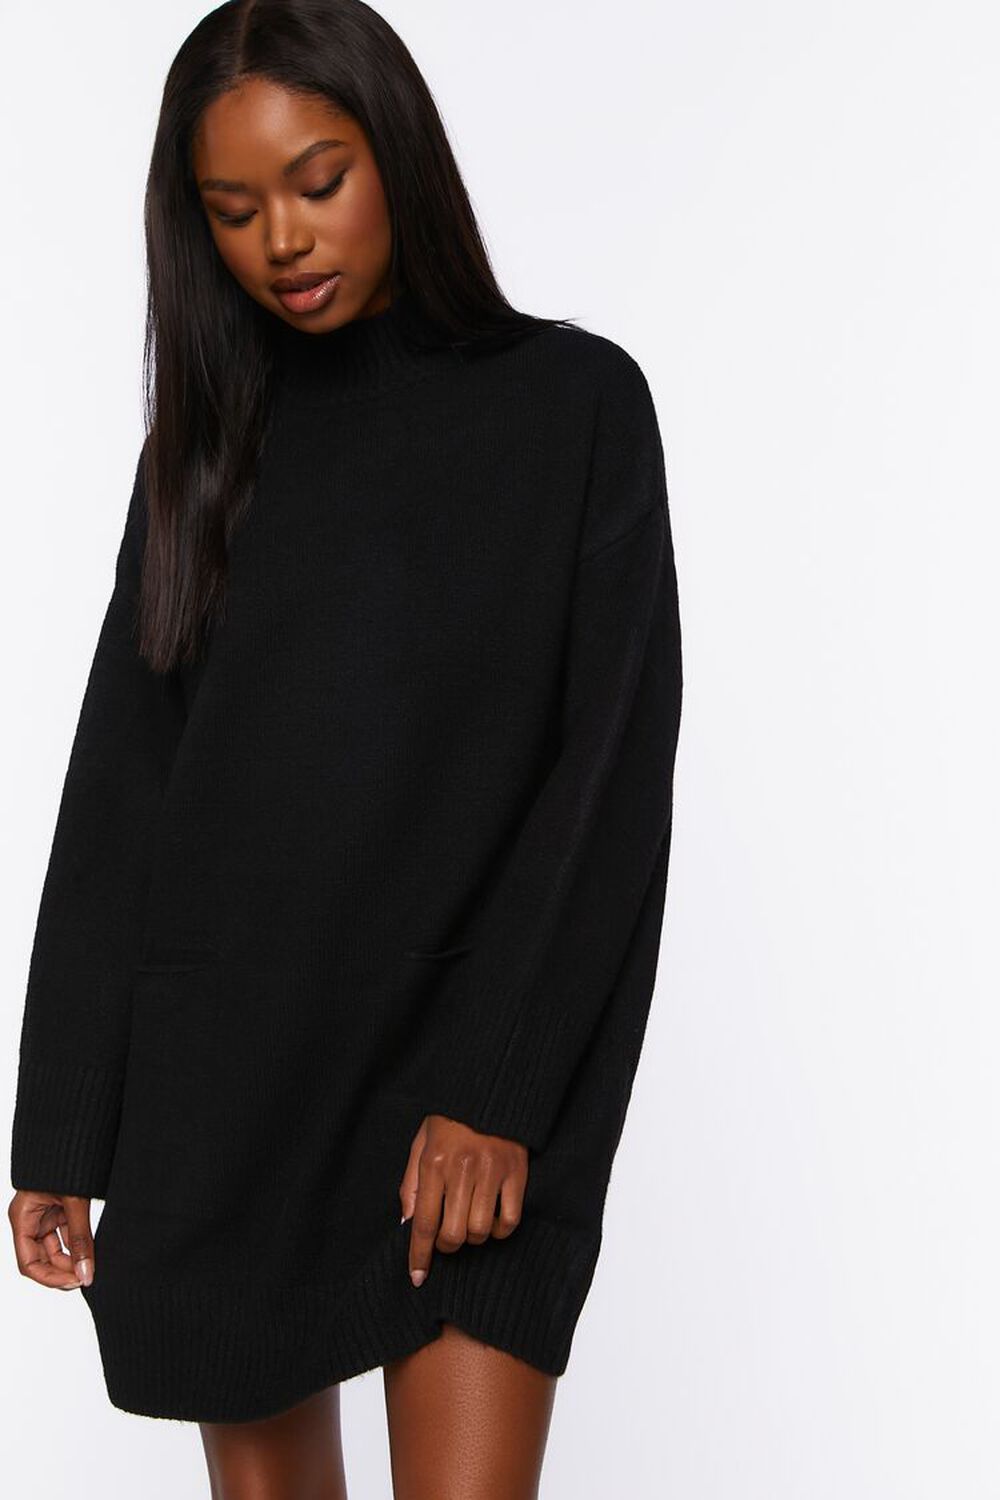 BLACK Marled Sweater Dress, image 1